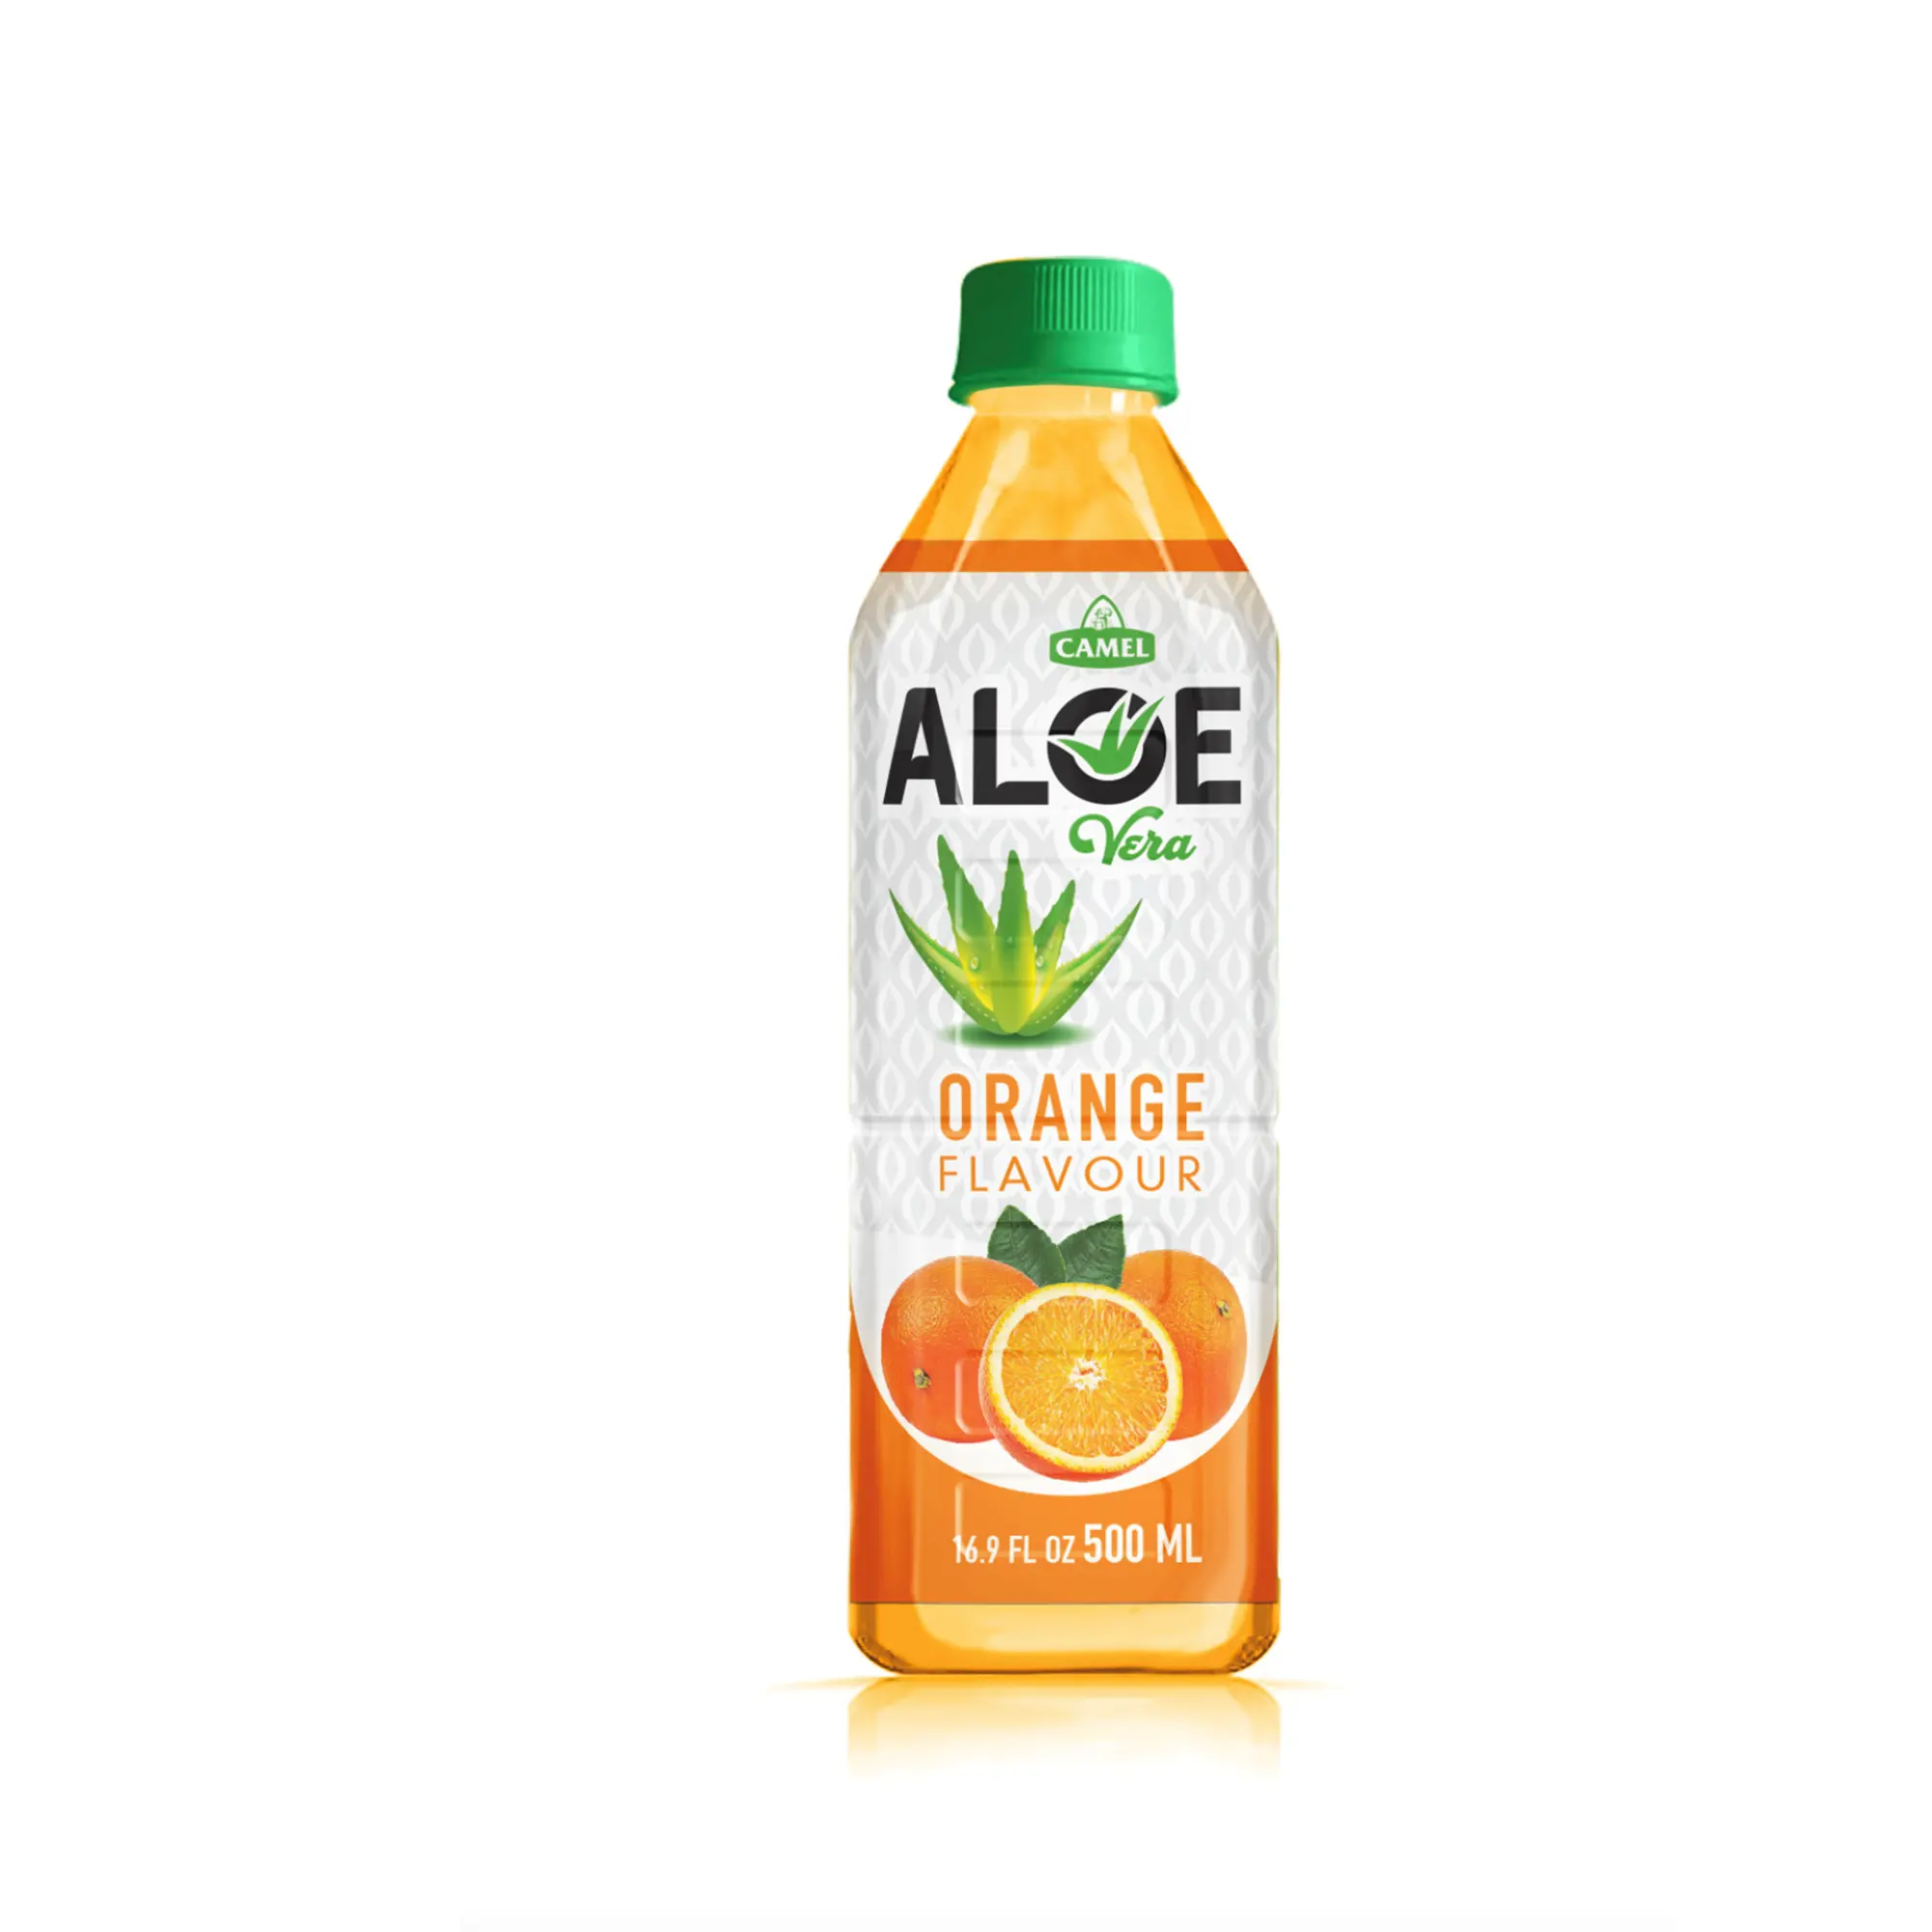 Aloe vera beber suco de aloe vera na etiqueta privada de suco pp